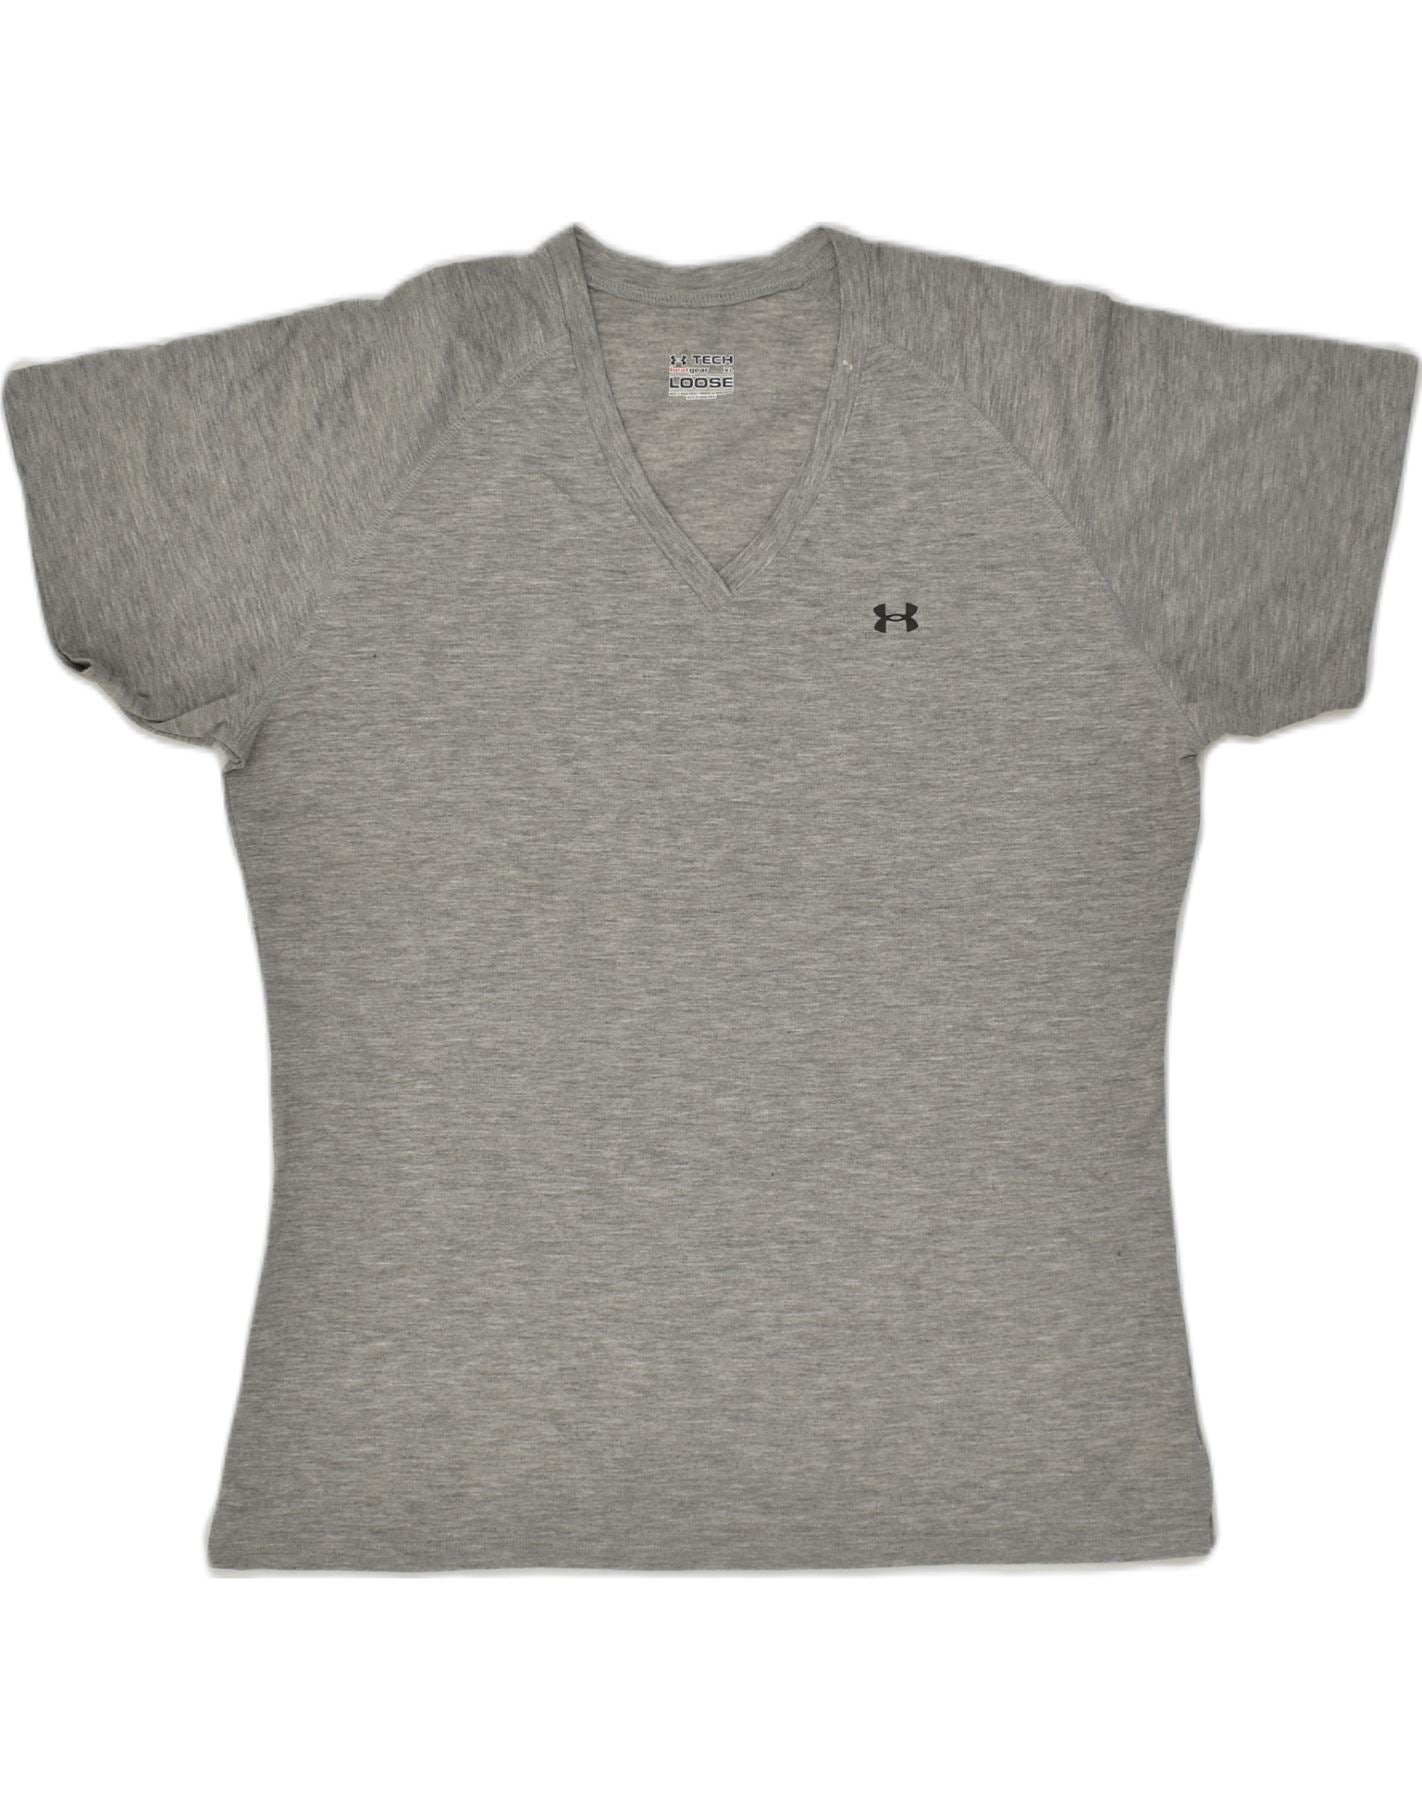 UNDER ARMOUR Womens T-Shirt Top UK 18 XL Grey Cotton